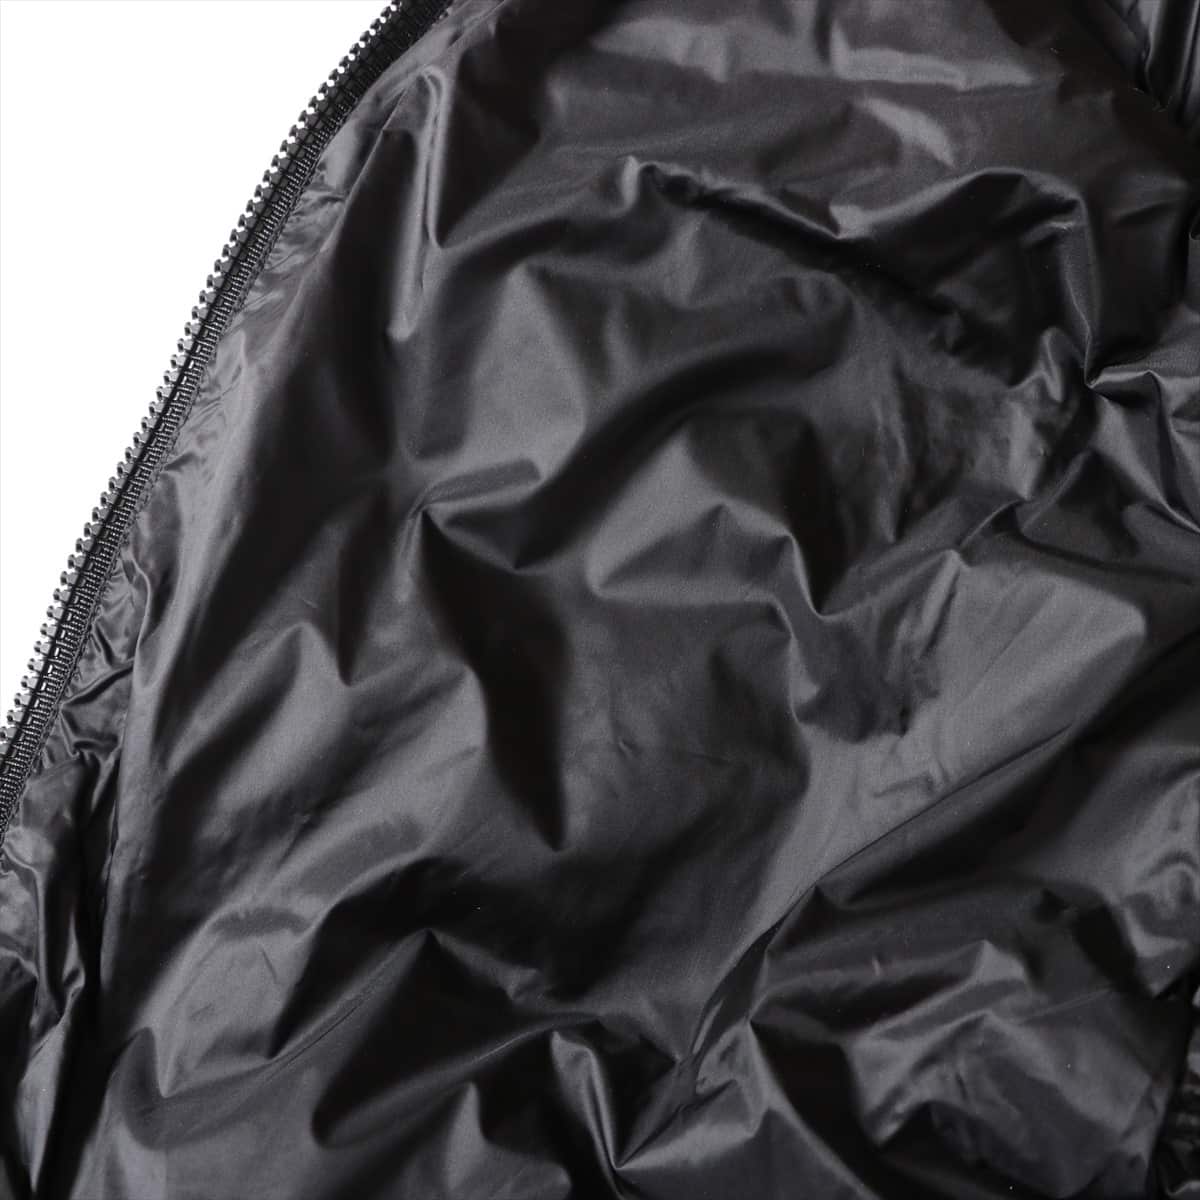 Moncler Nylon Down jacket 0 Ladies' Black Bouges 15 years